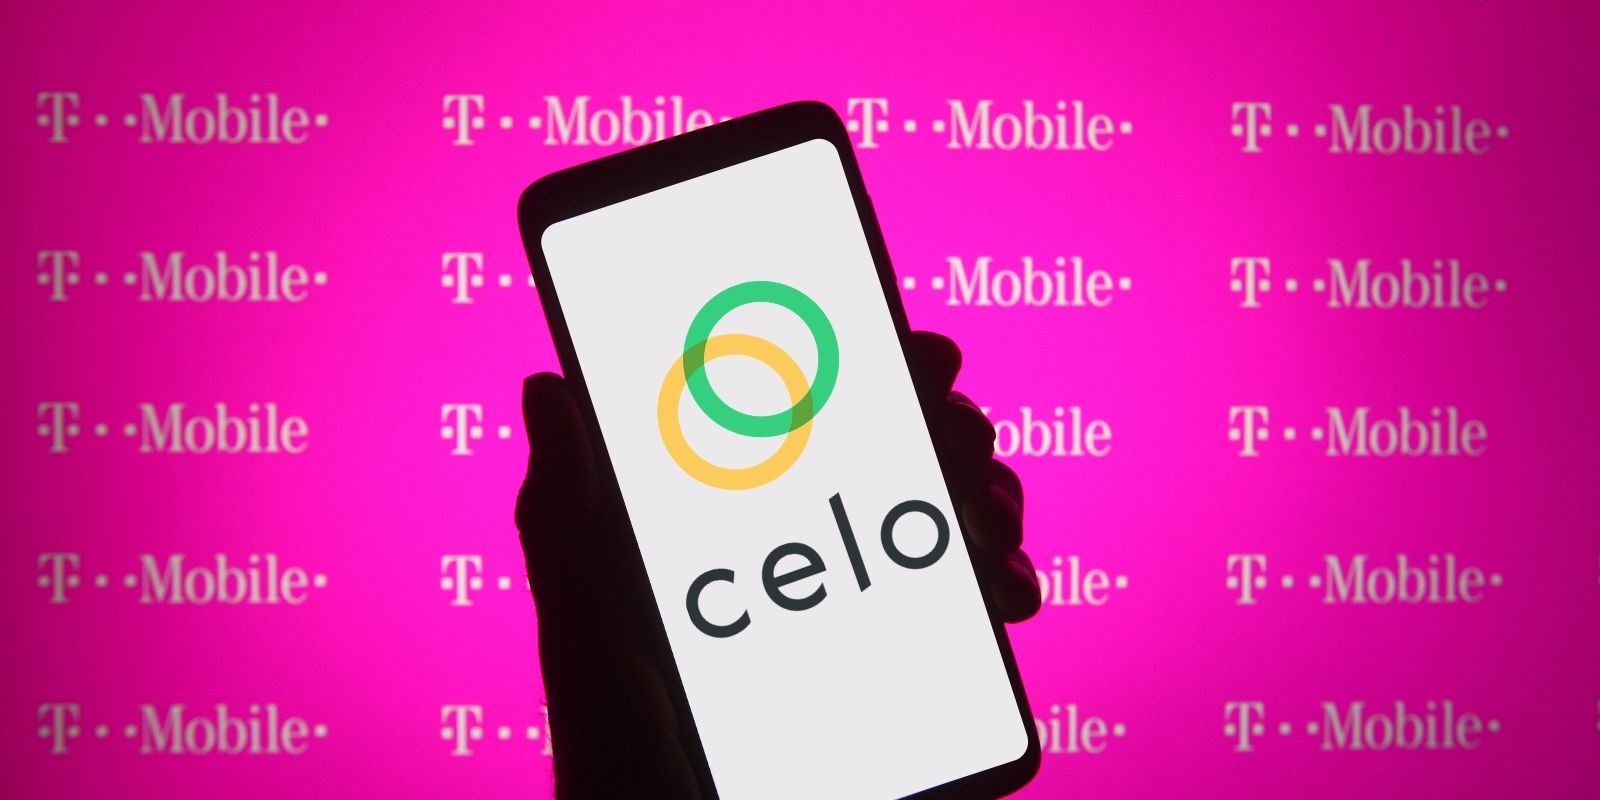 Celo Network (CELO) s’associe à Deutsche Telekom et lance un stablecoin en euro